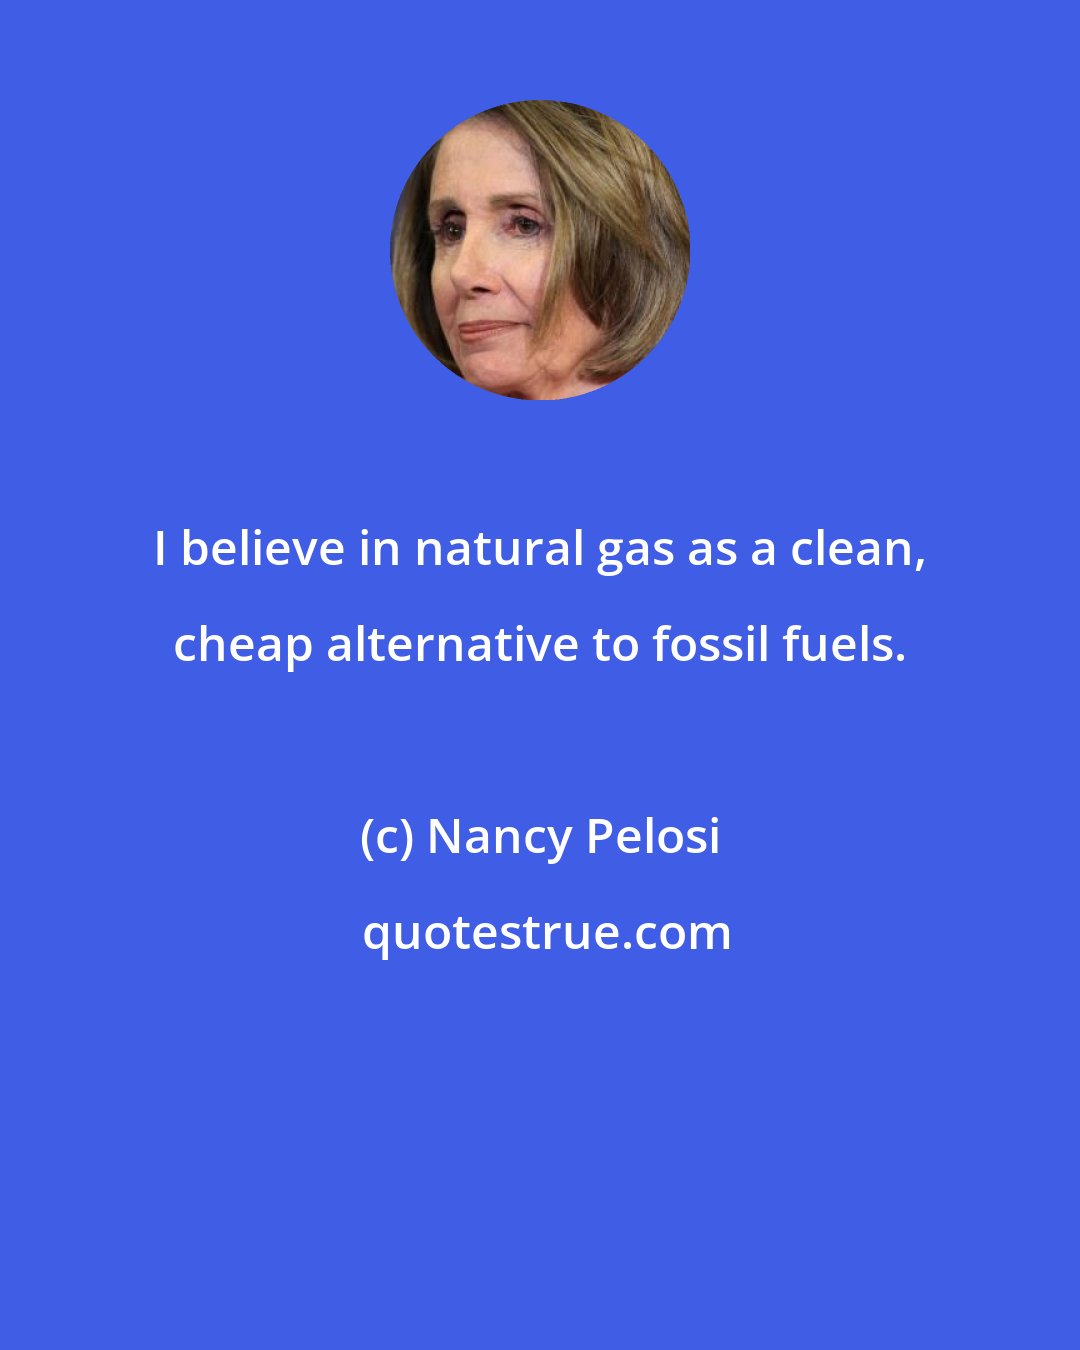 Nancy Pelosi: I believe in natural gas as a clean, cheap alternative to fossil fuels.